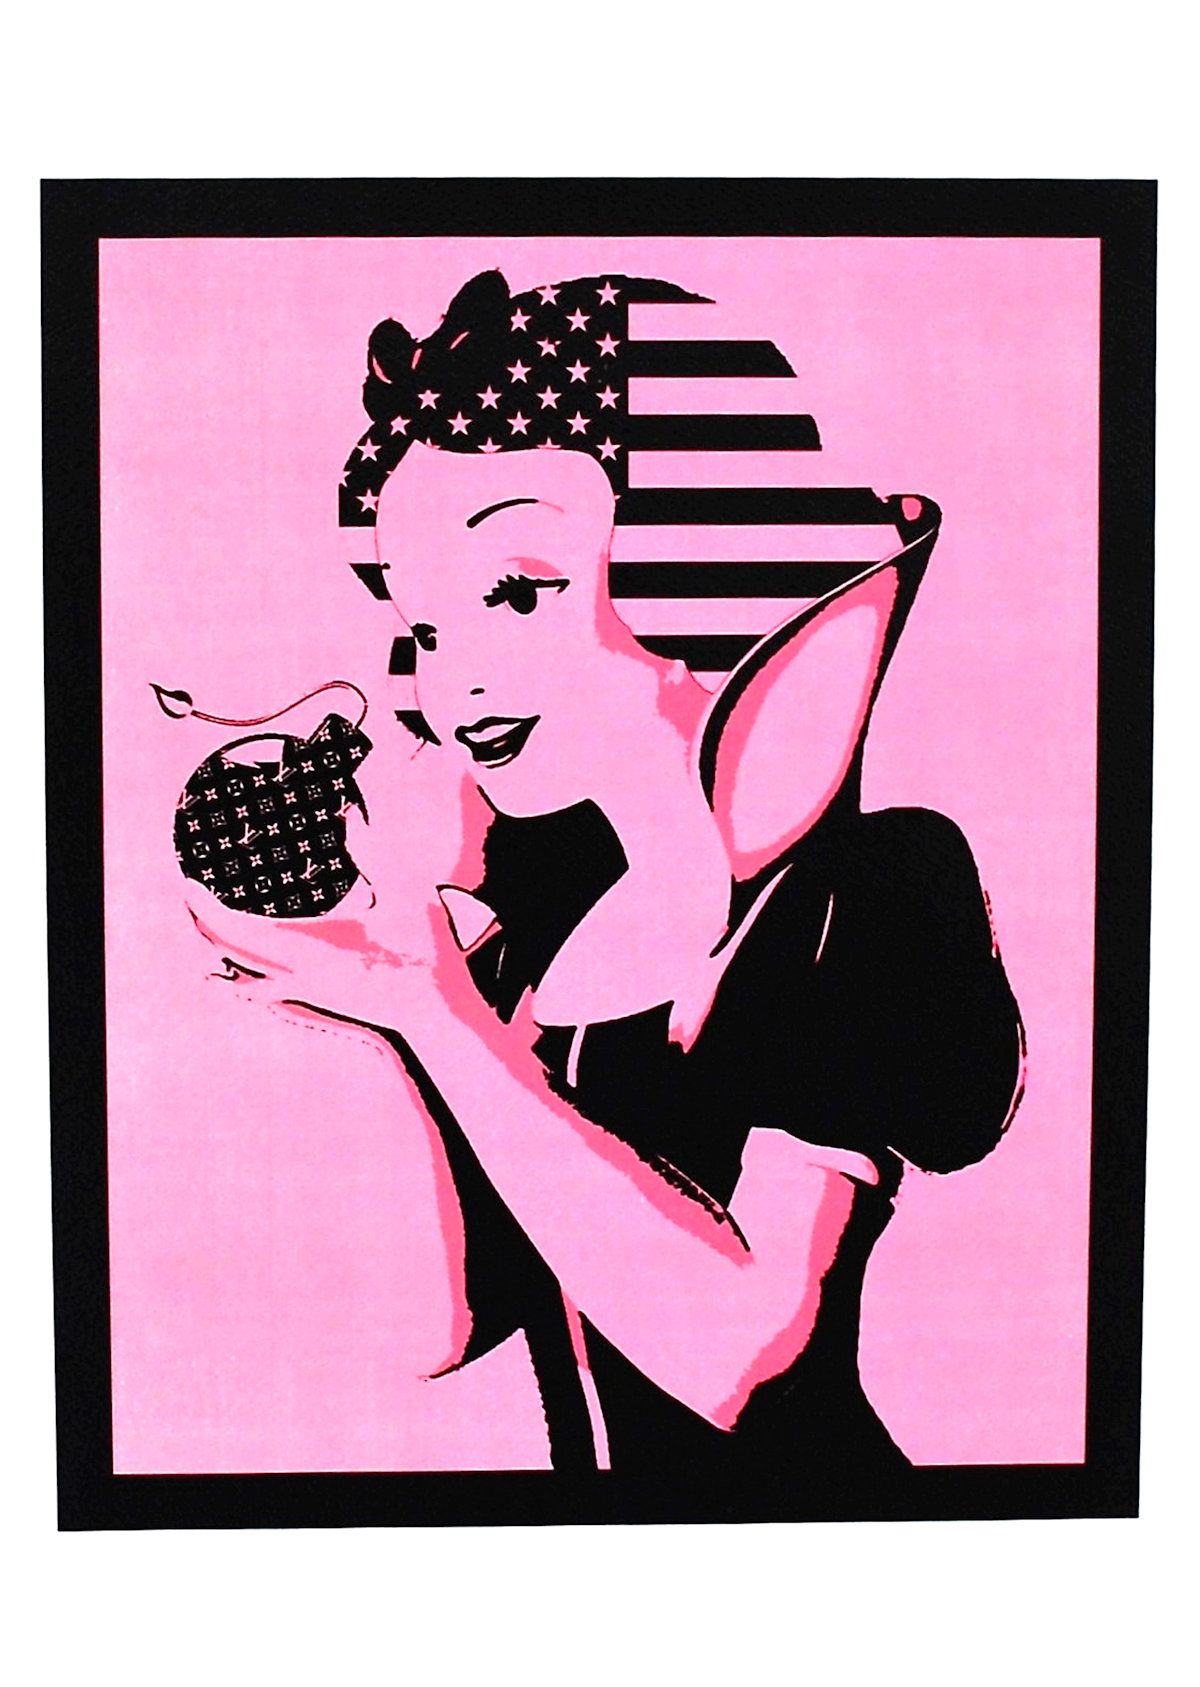 Death NYC 纽约市的死亡

粉红雪花弹2014

丝网印刷。

限量发行100张印刷品。

随机印刷品的编号。

尺寸：45 x 32 cm - 艺术纸&hellip;